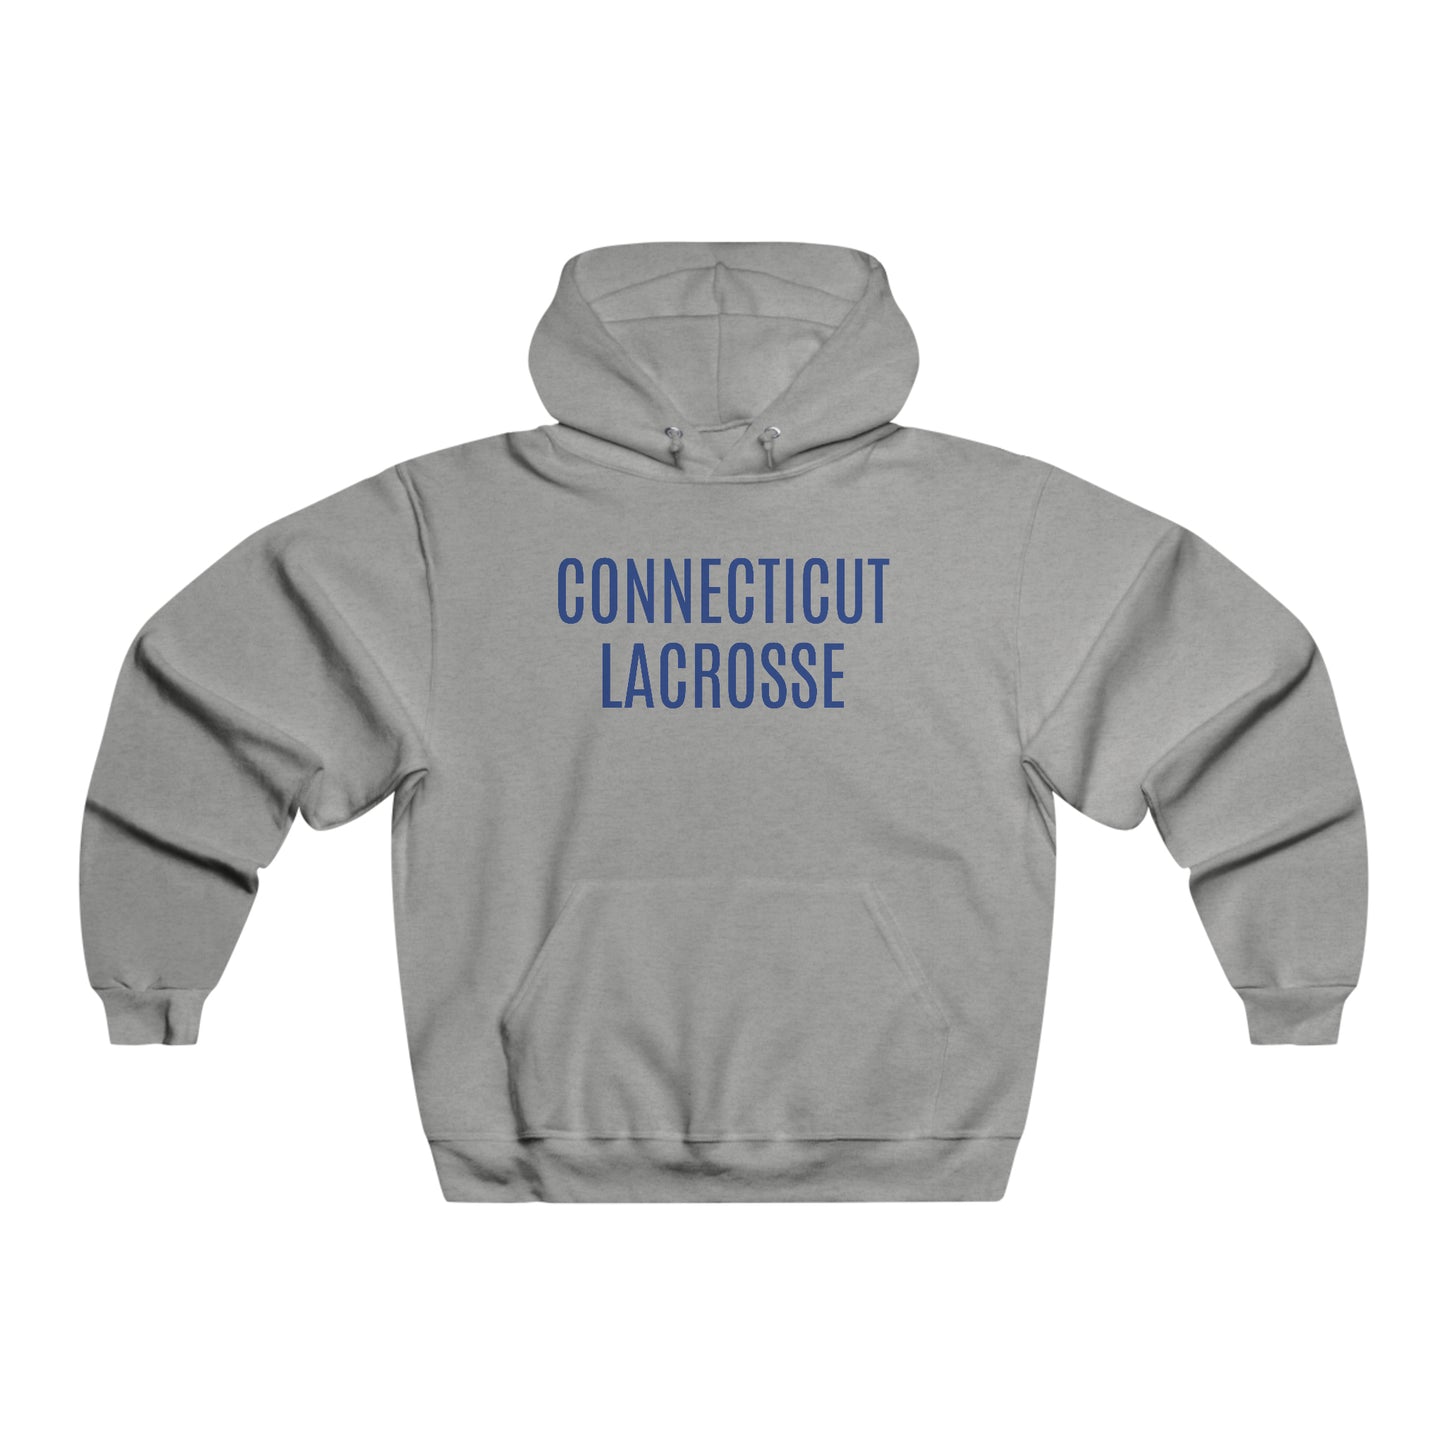 Connecticut Lacrosse Hooded Sweatshirt